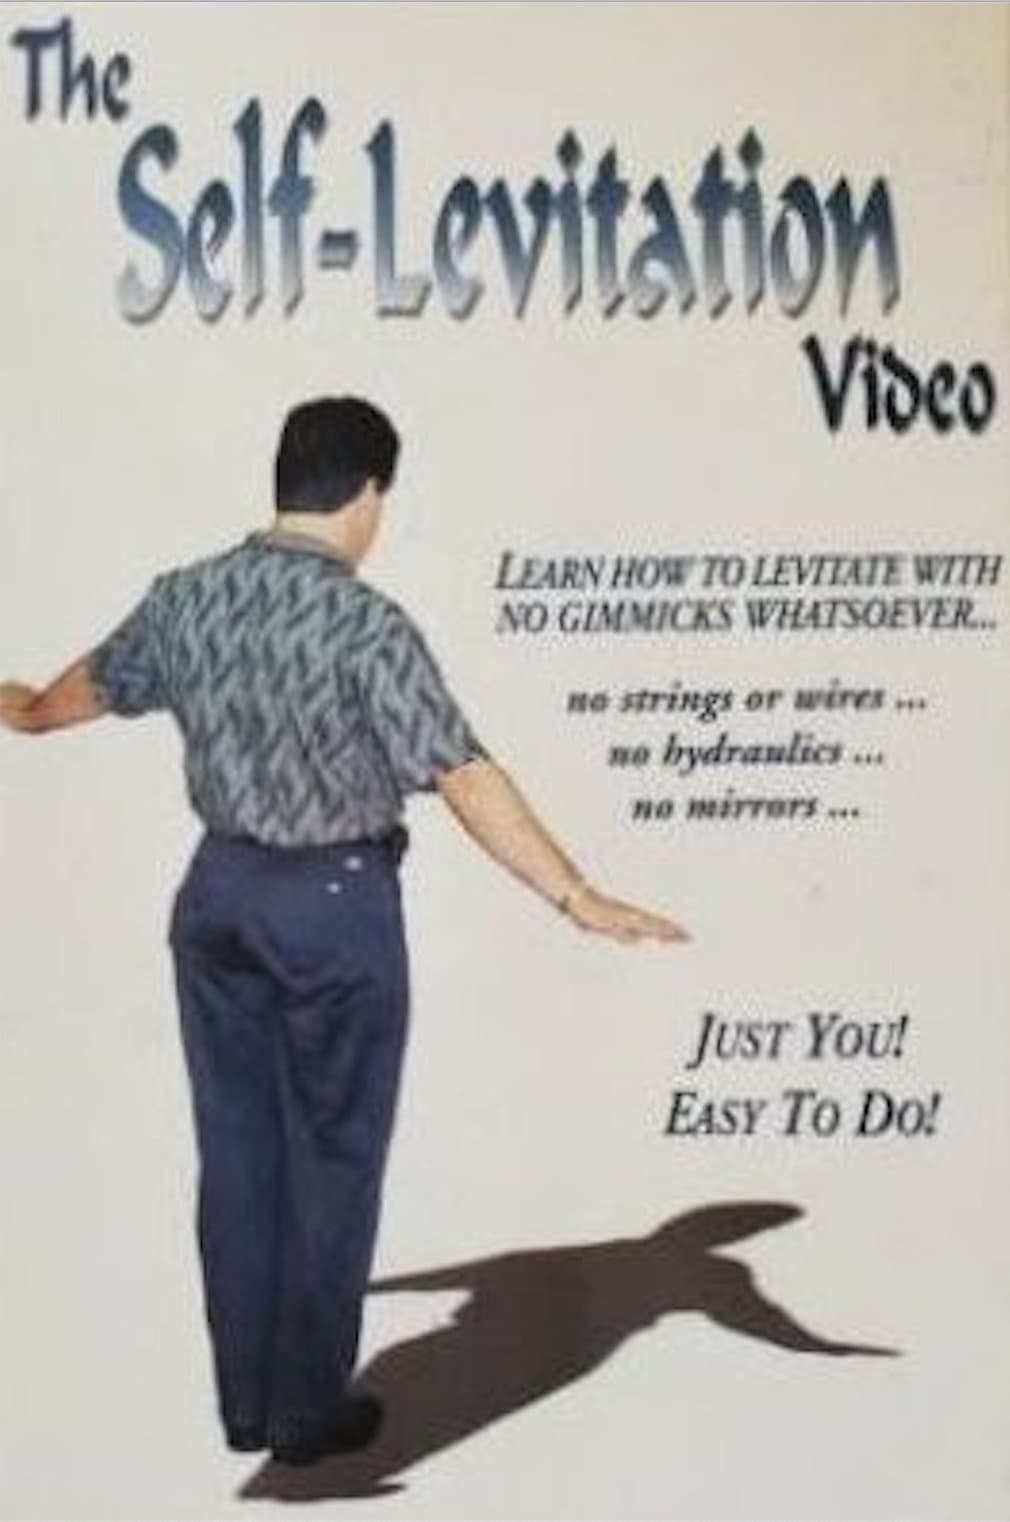 The Self-Levitation Video